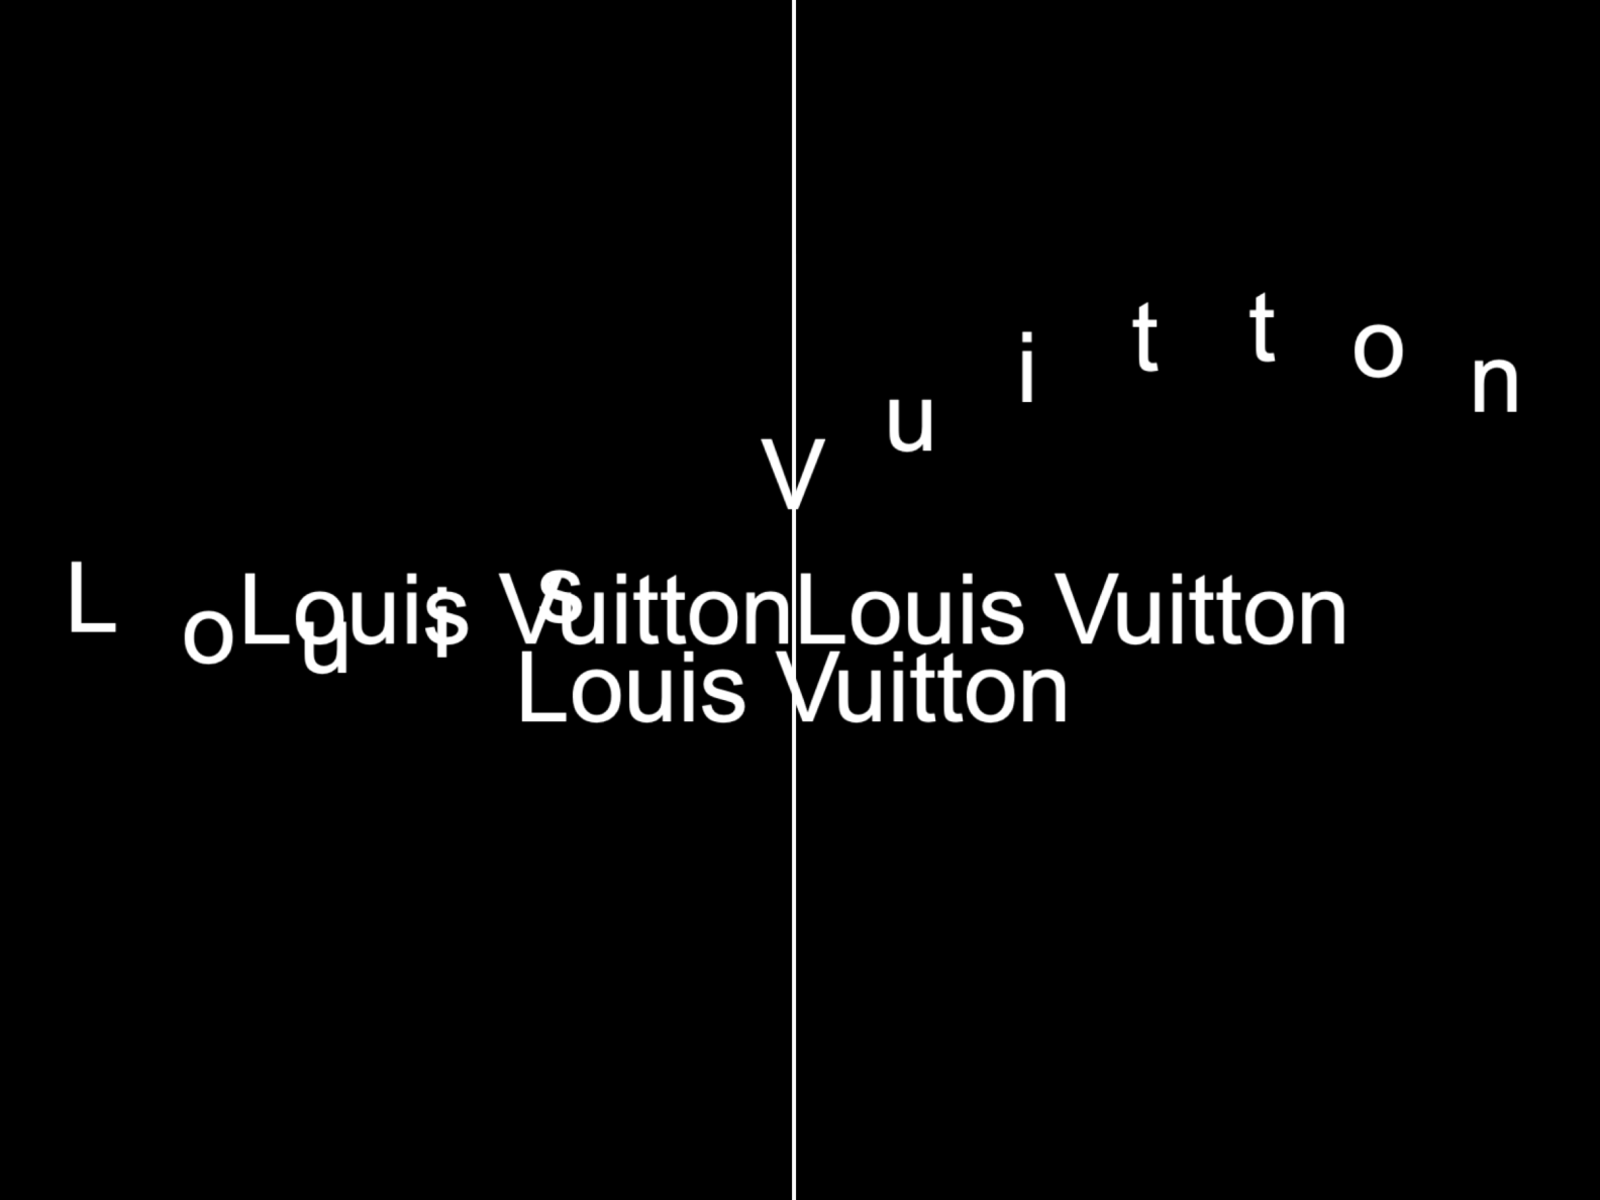 LOUIS VUITTON Font is  Futura